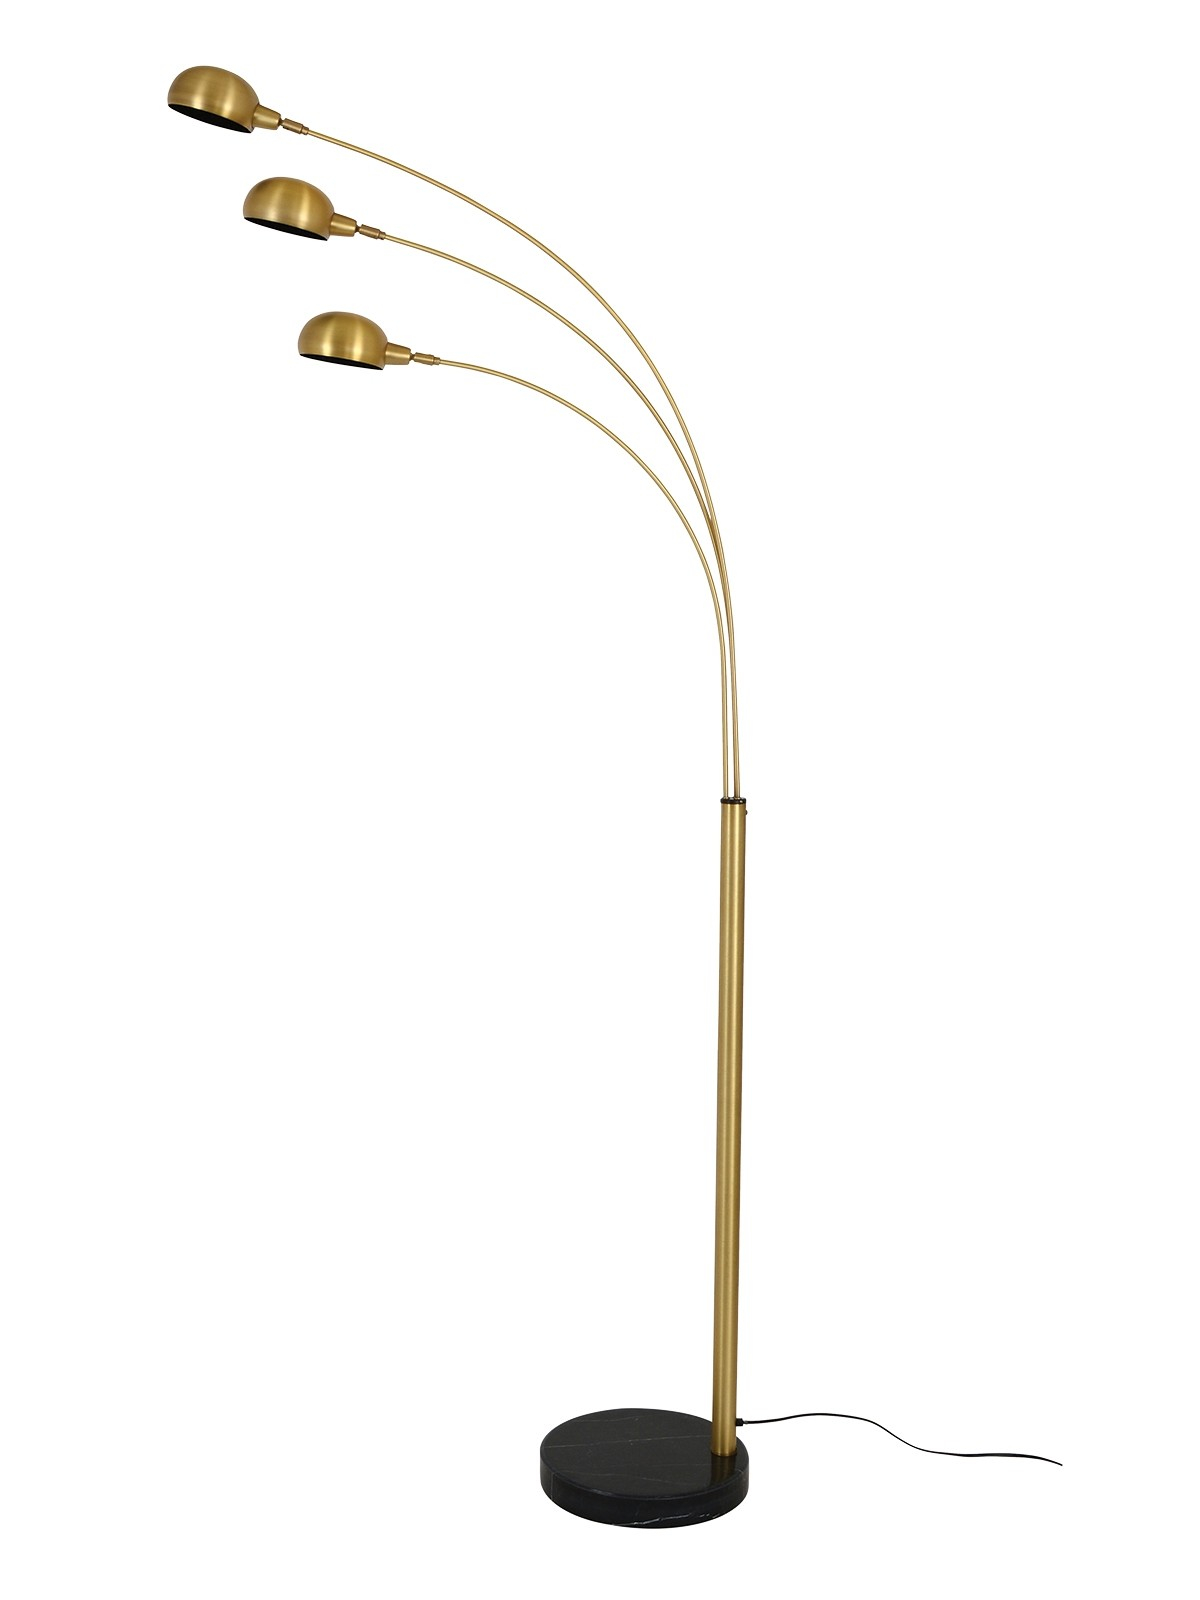 Centaur 3 Light Floor Lamp In Antique Brass regarding size 1200 X 1600